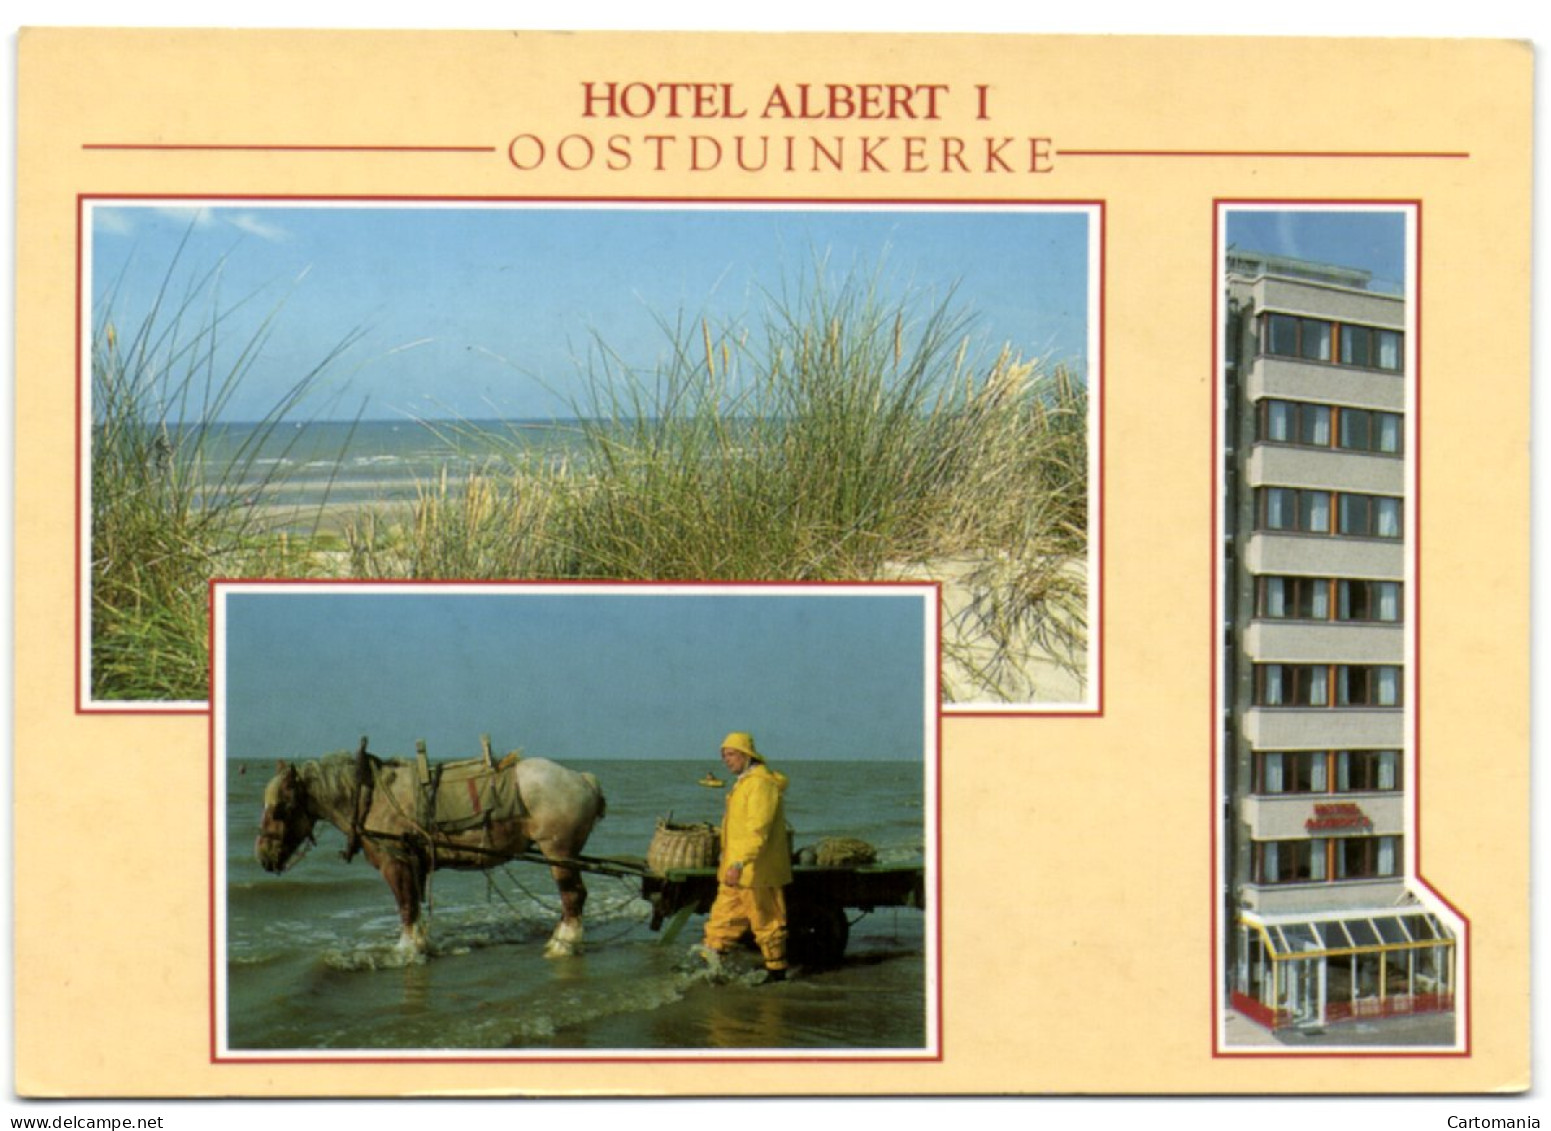 Oostduinkerke - Hotel Albert I - Oostduinkerke